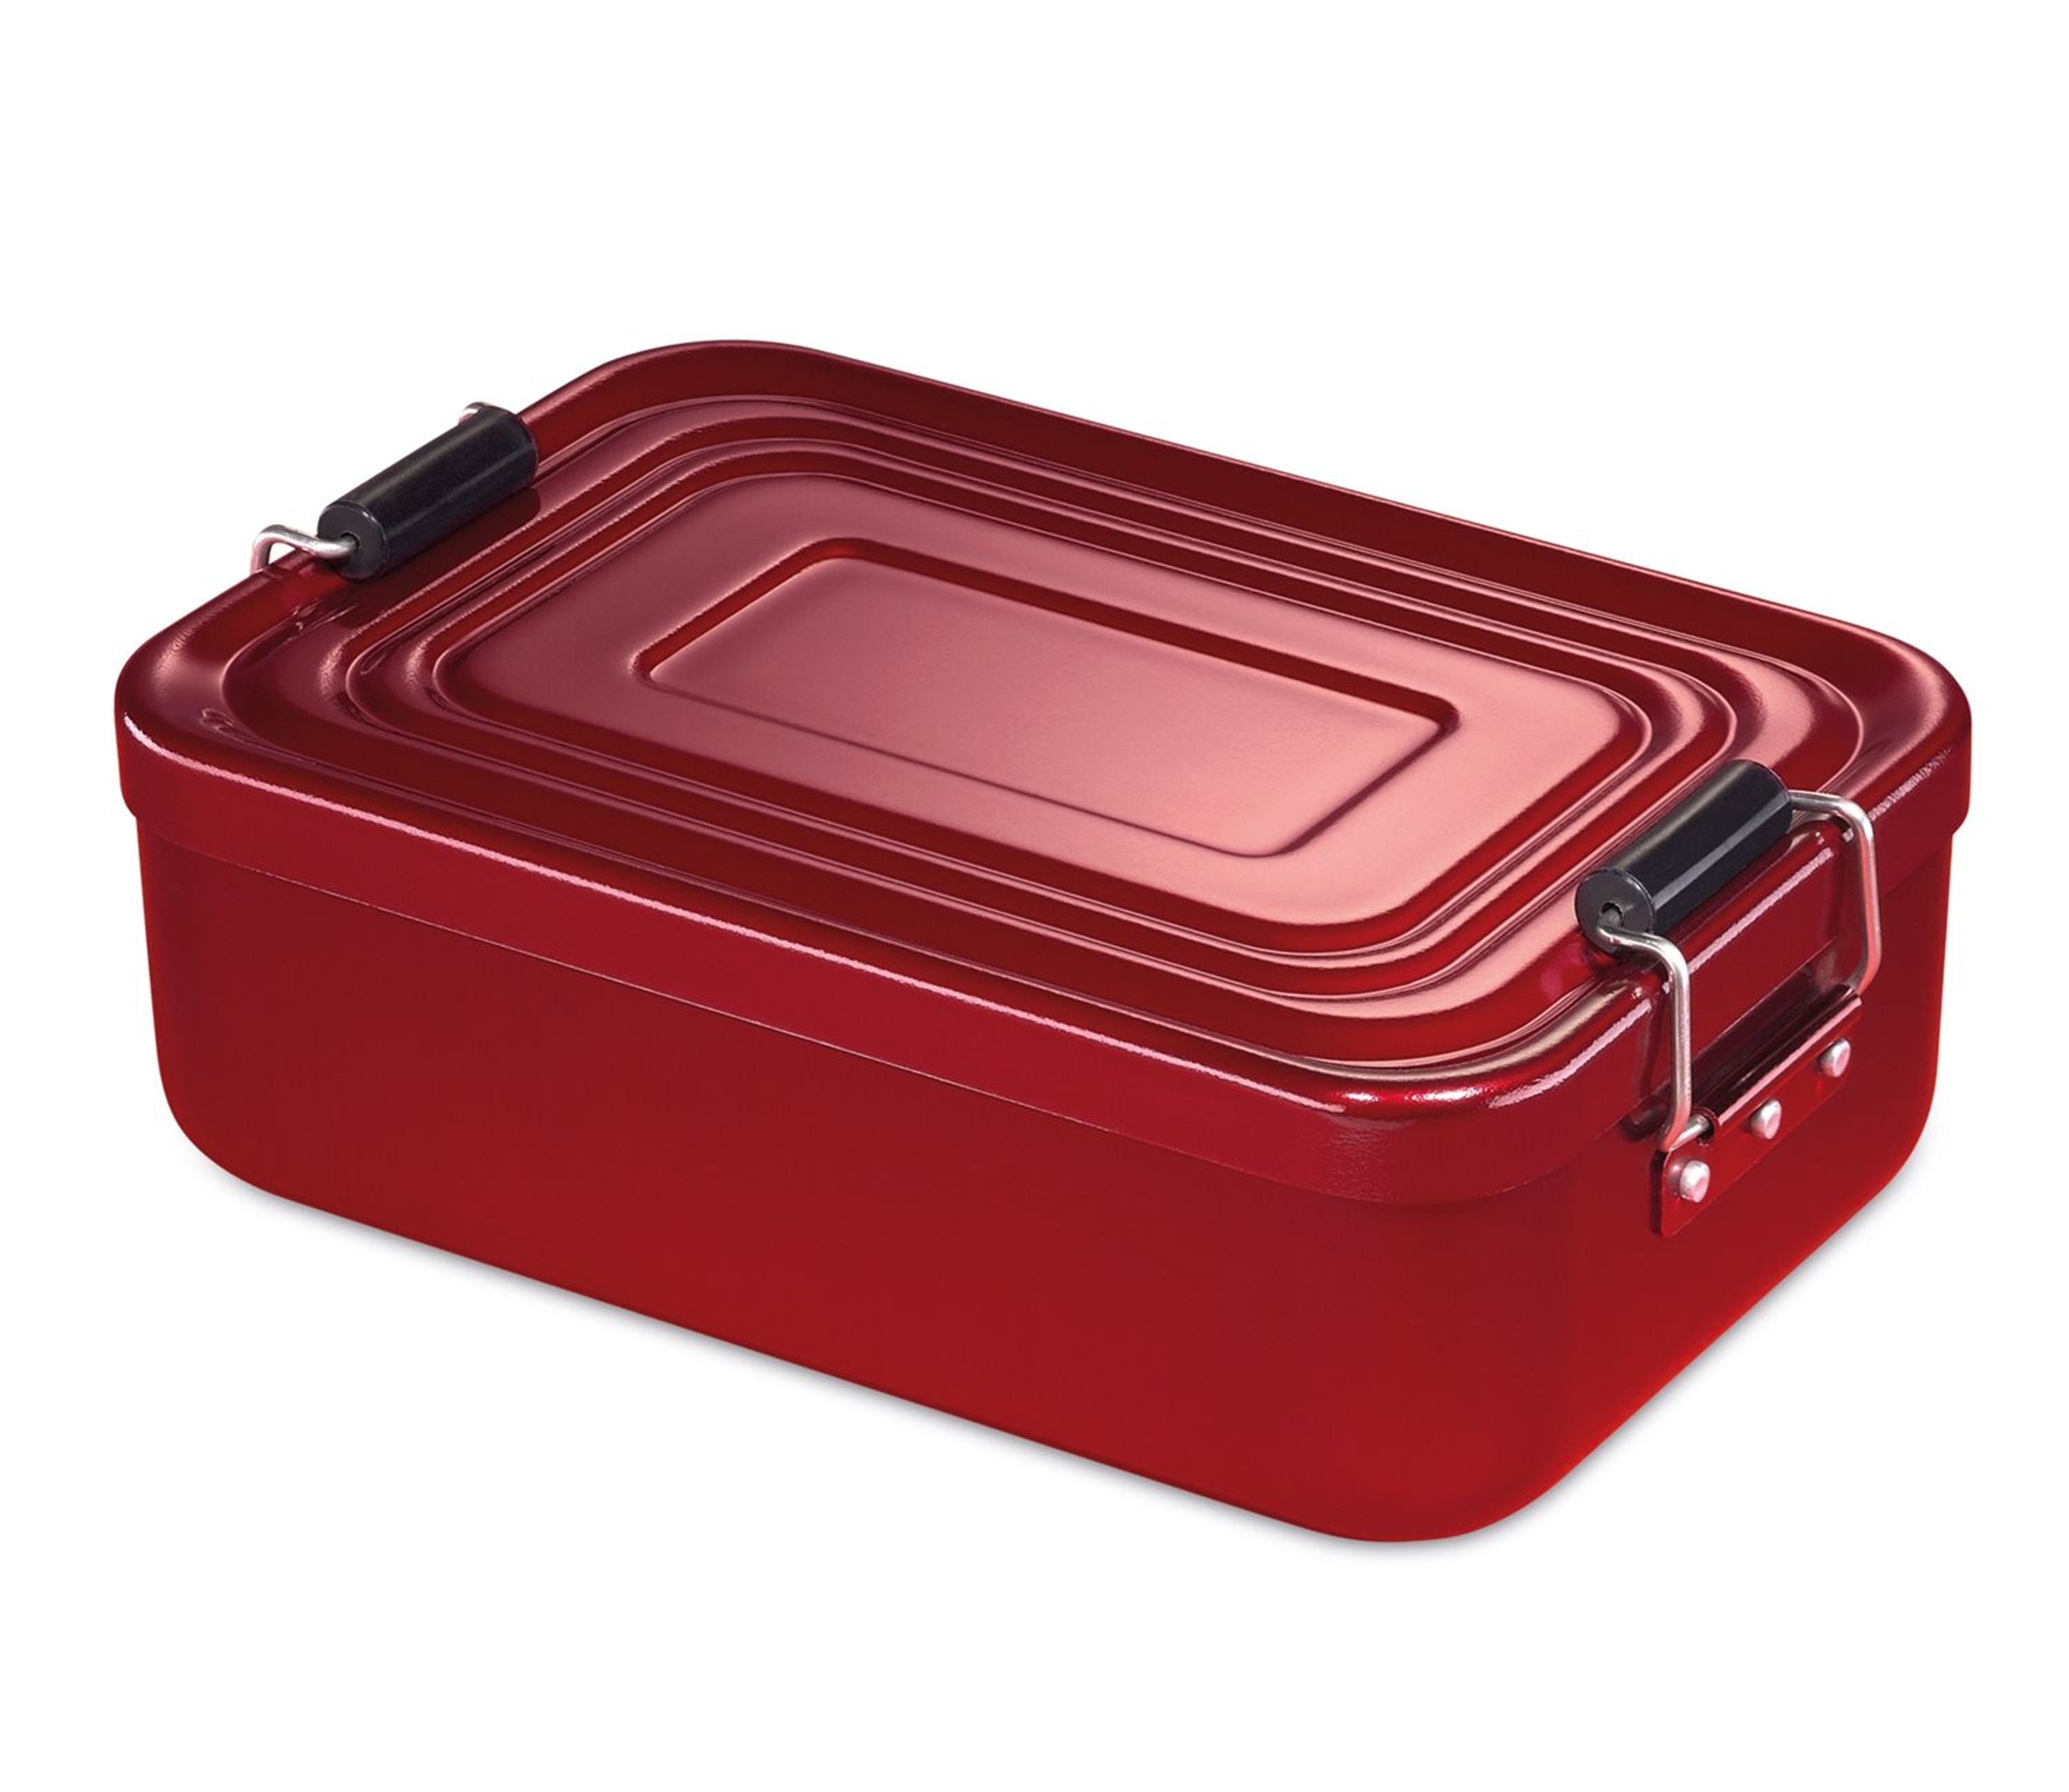 Küchenprofi Lunchbox groß, rot